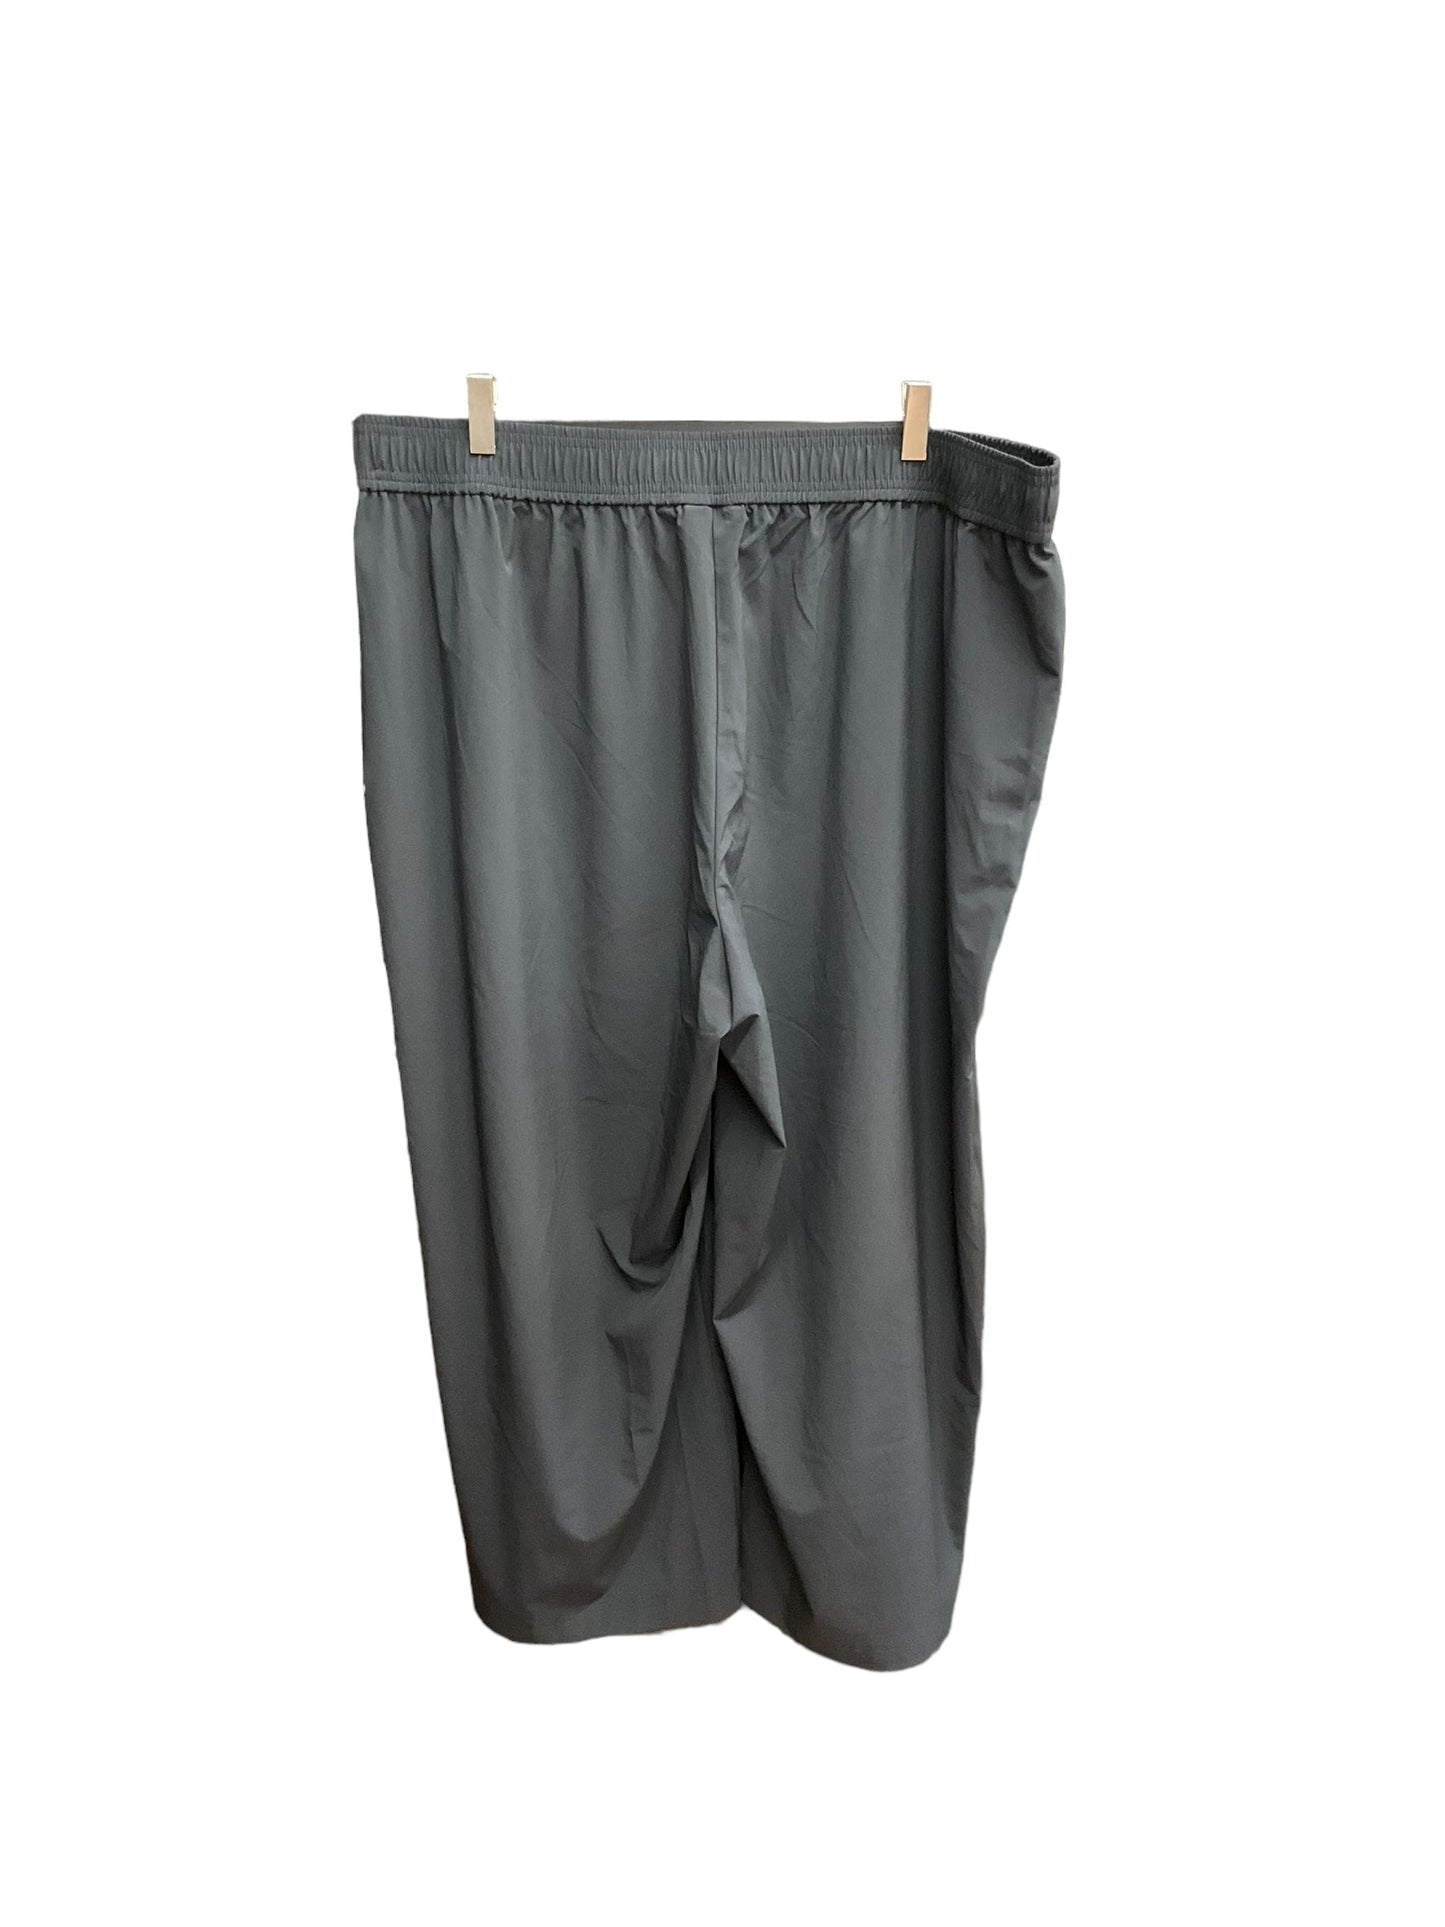 Black Athletic Pants J. Jill, Size 2x